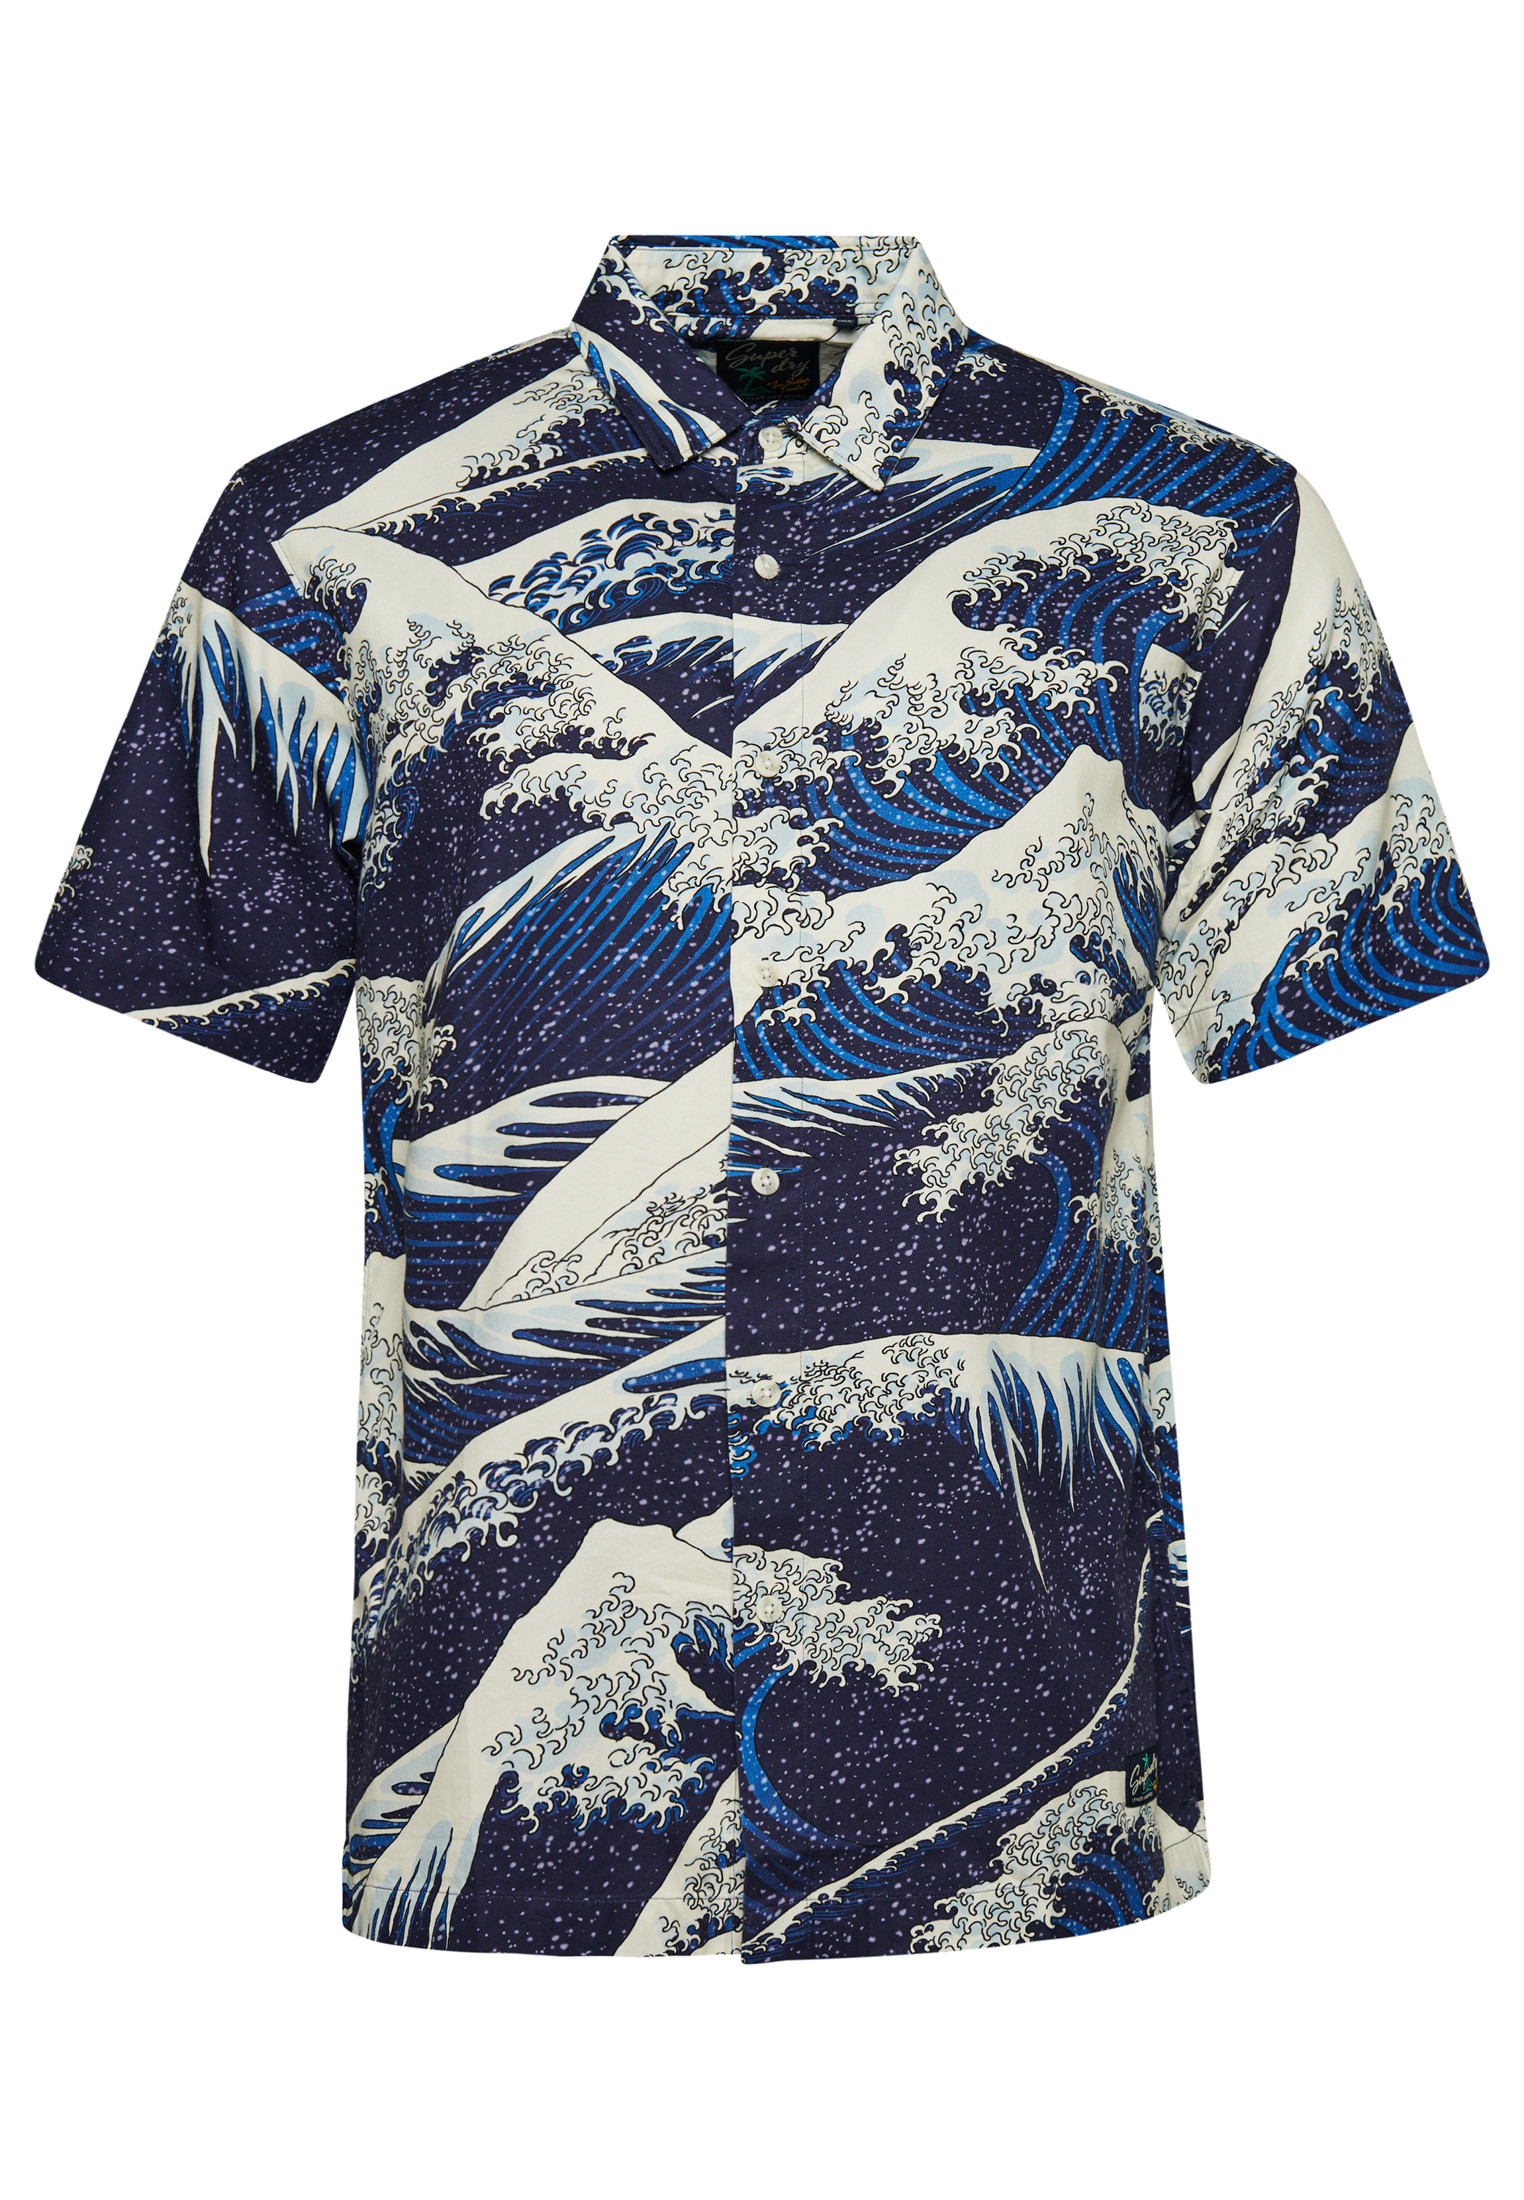 Superdry short sleeve shirt in sea wave print, Blue, large image number 0